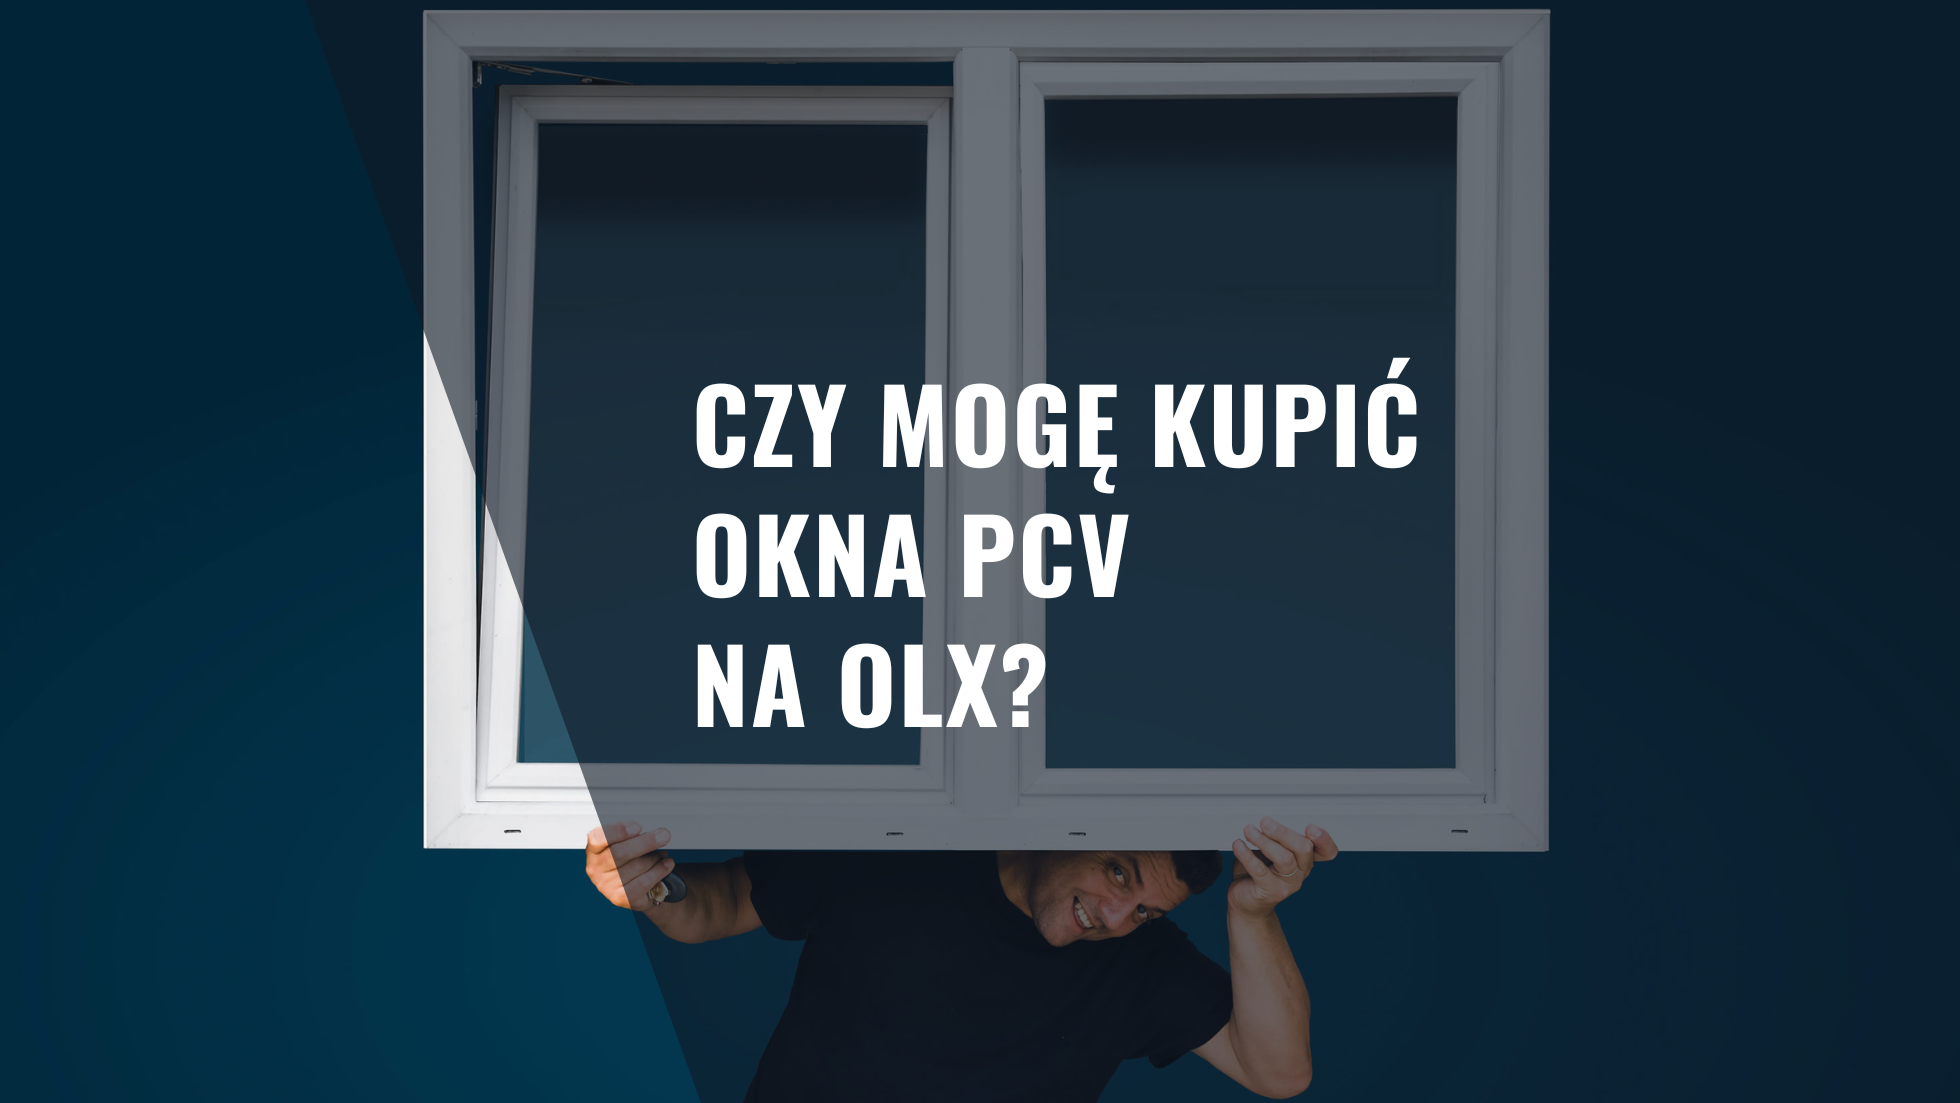 Czy mogę kupić okna PCV na OLX?